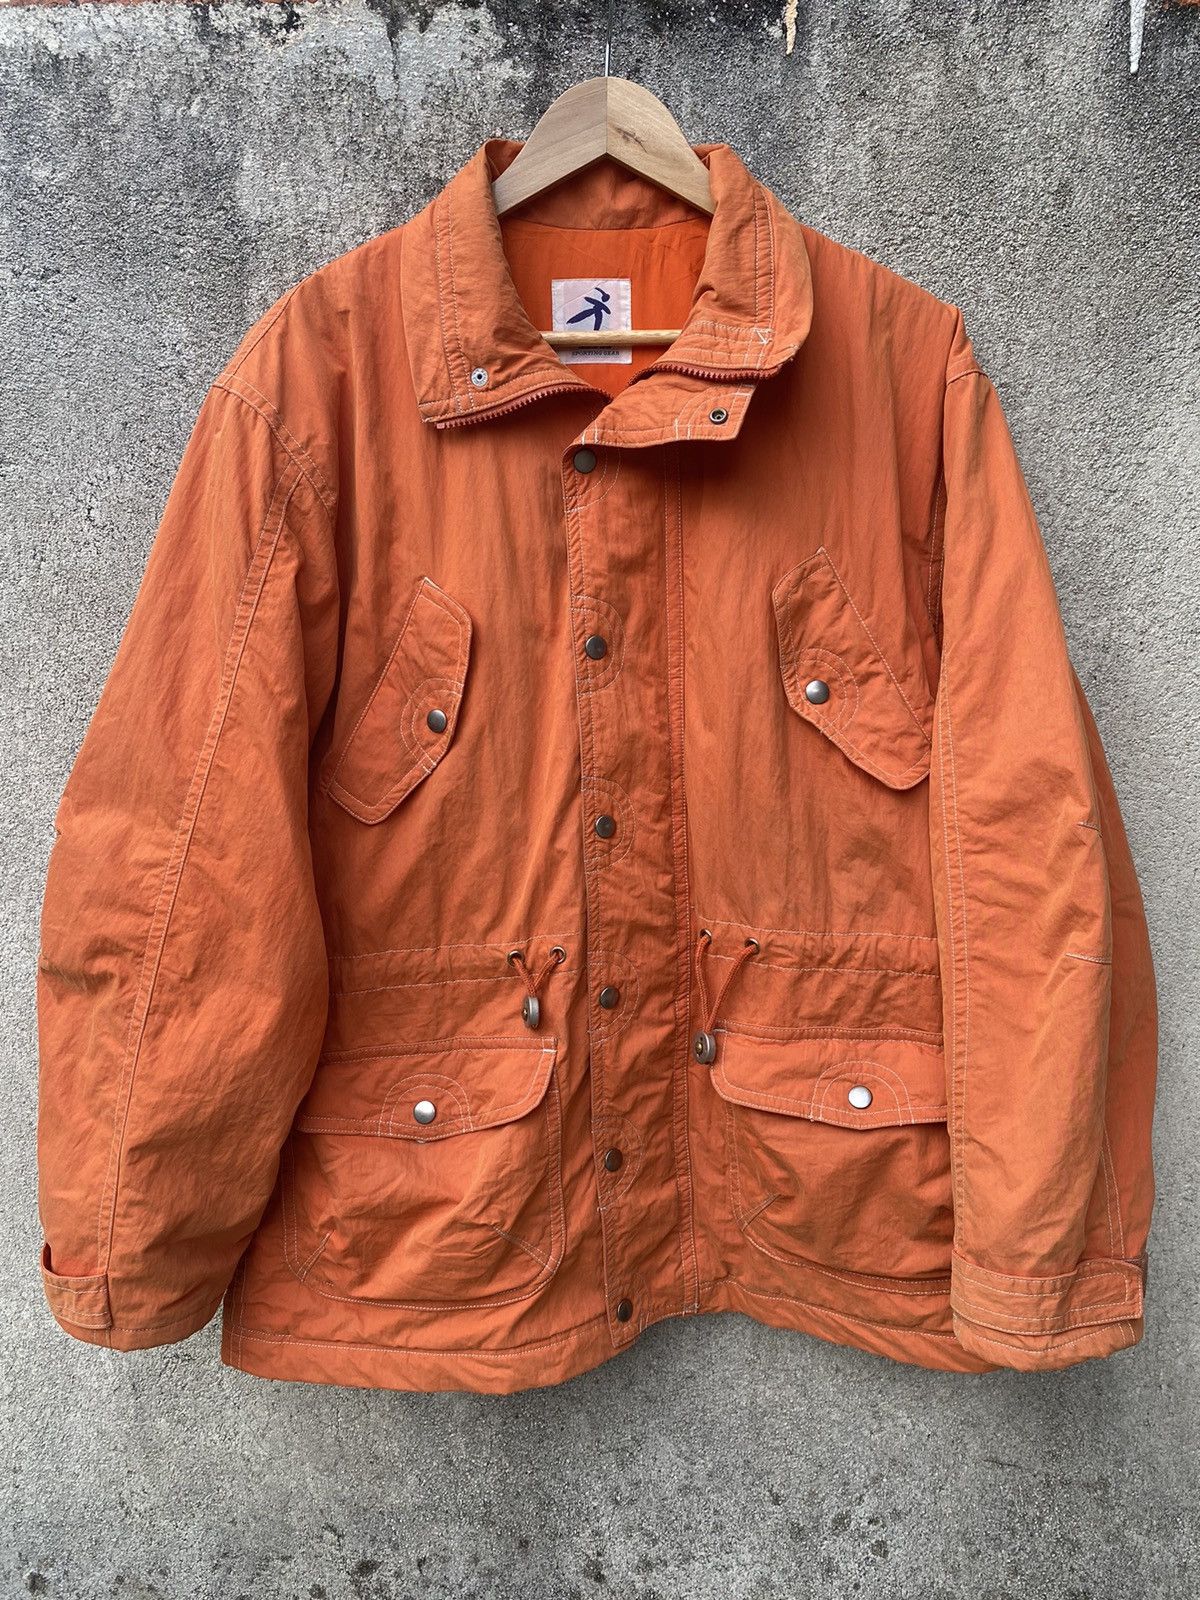 Issey Miyake - Vintage Hai Sporting Gear Parka Jacket Orange Colour - 1